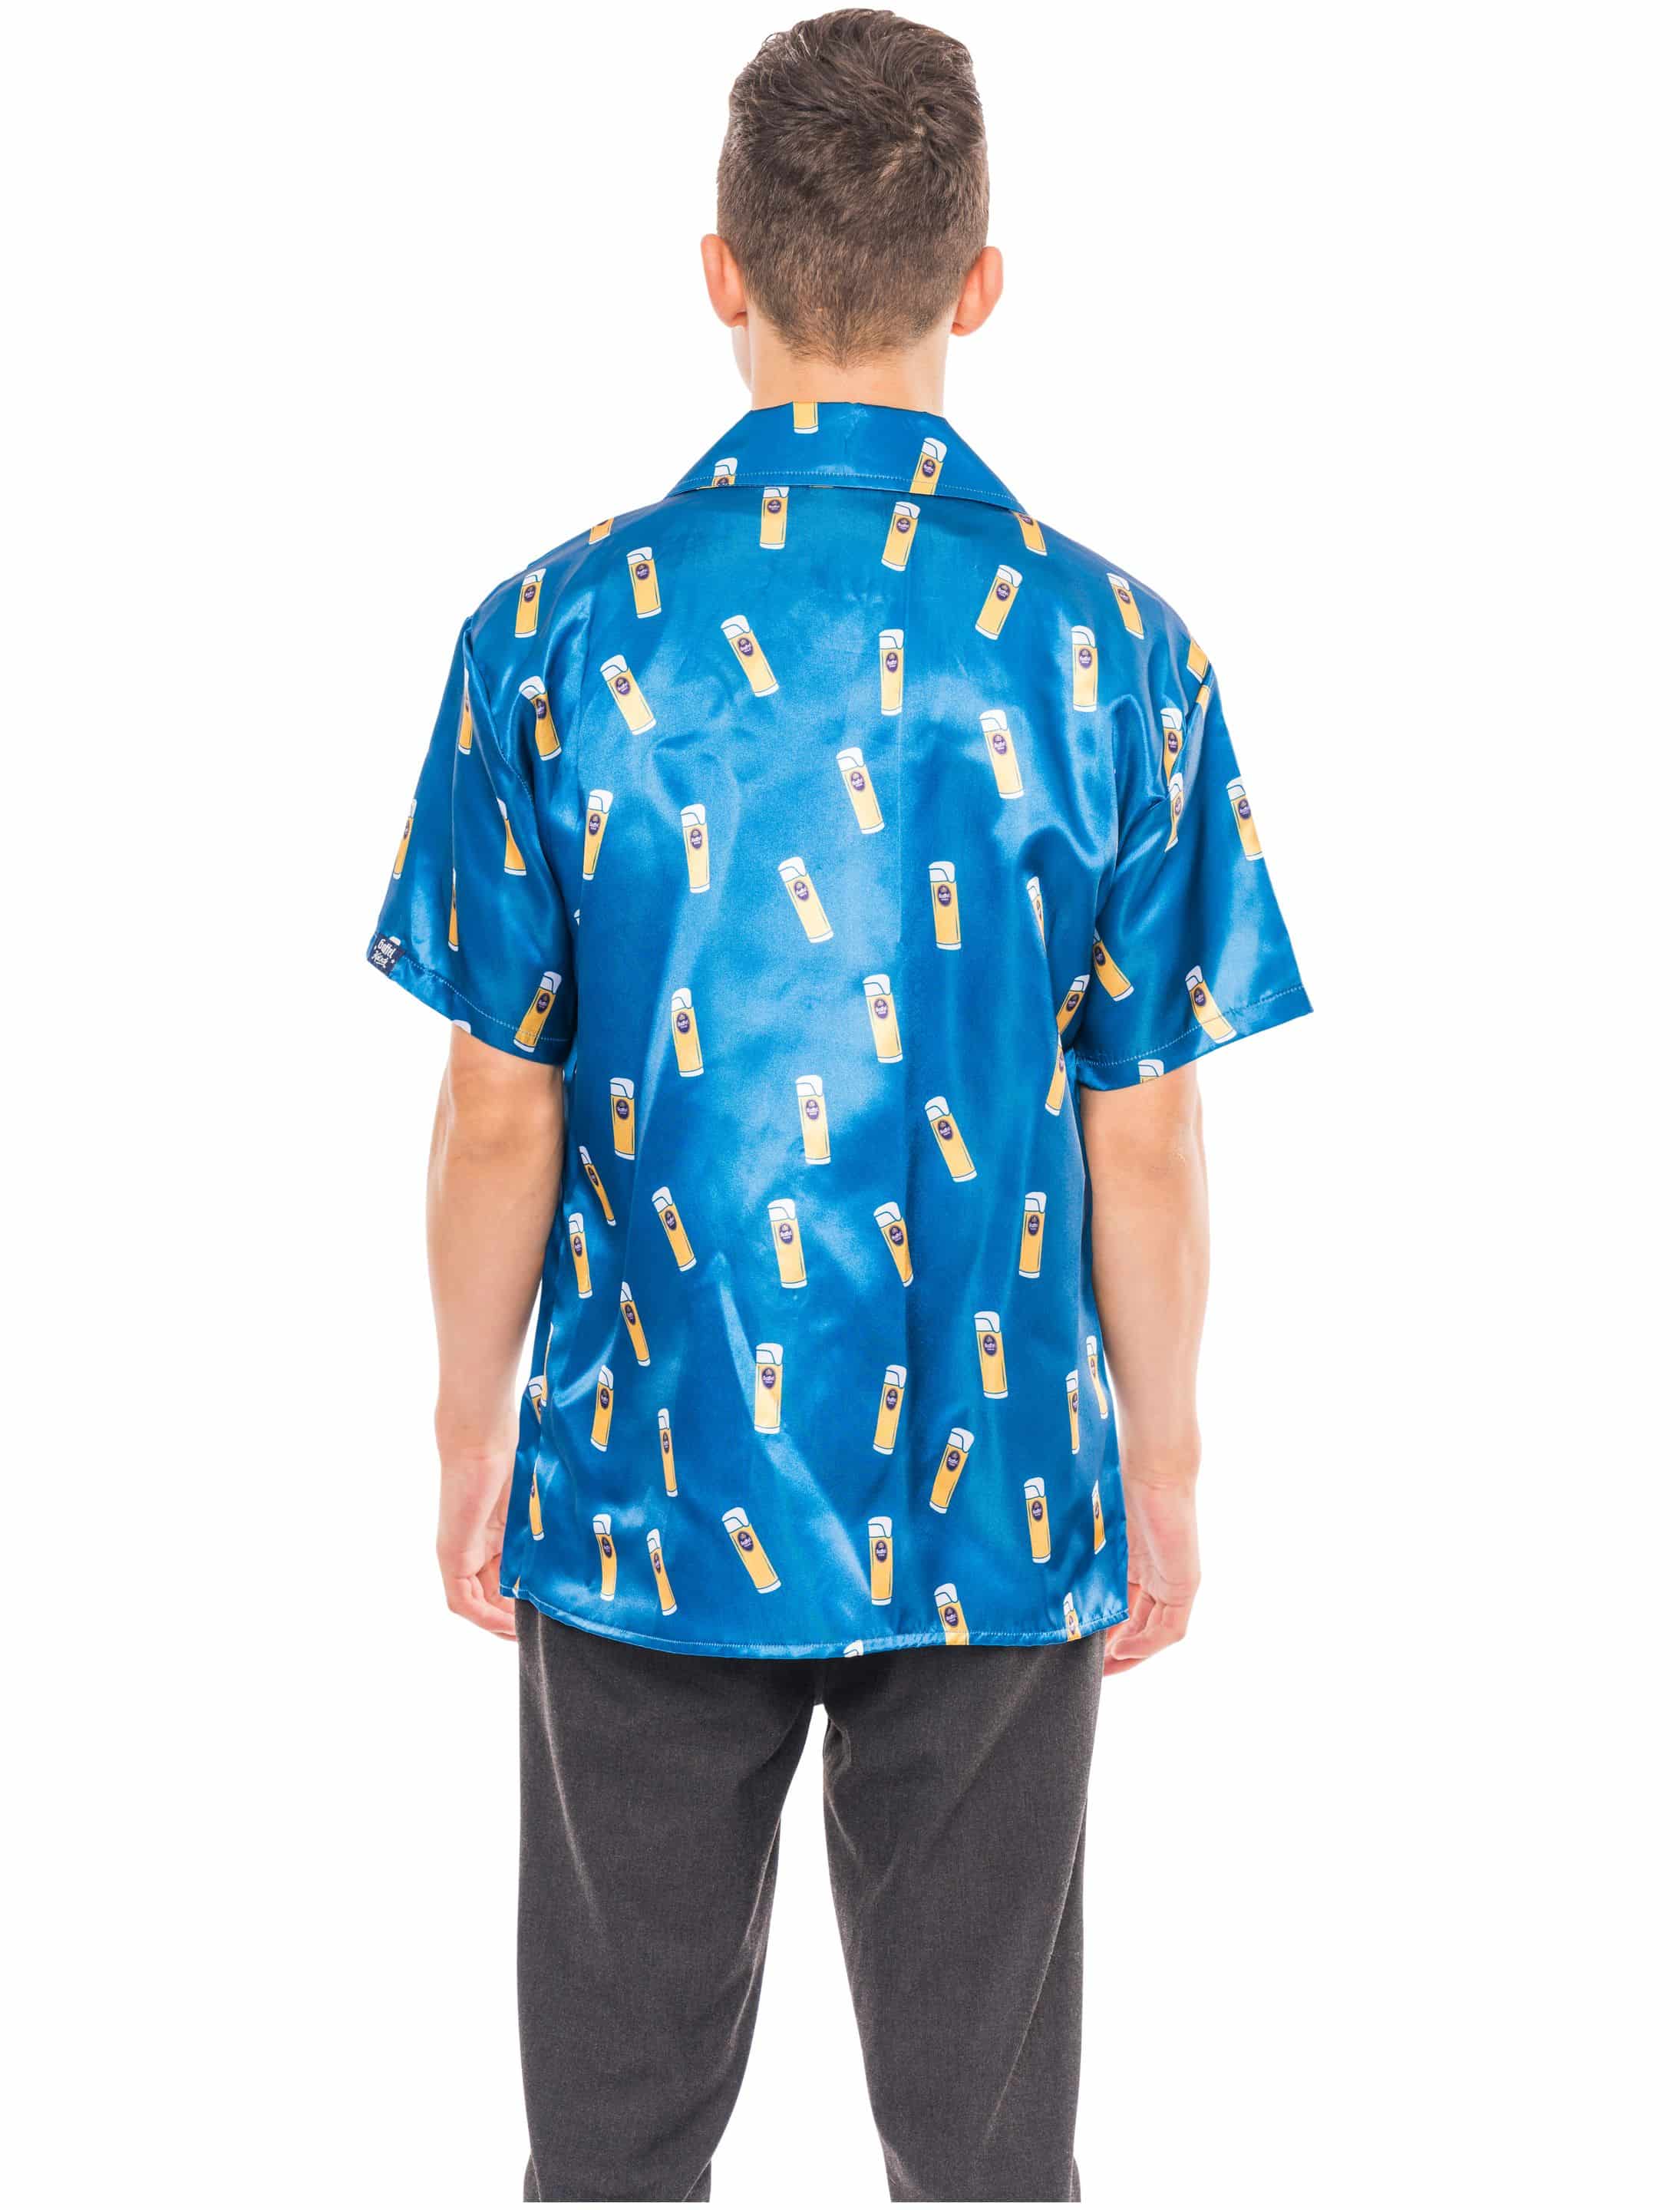 JIS Satin Shirt Herren blau L-XL